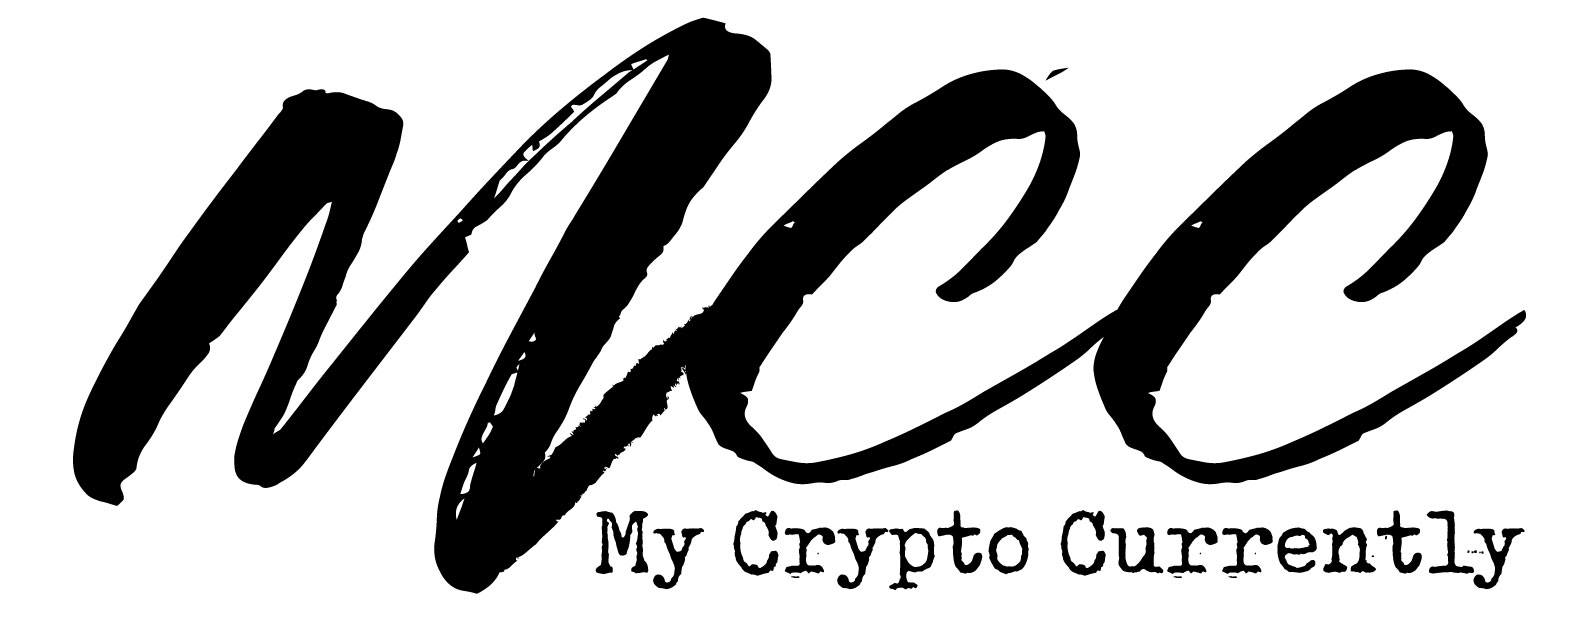 MCC signature logo.jpg